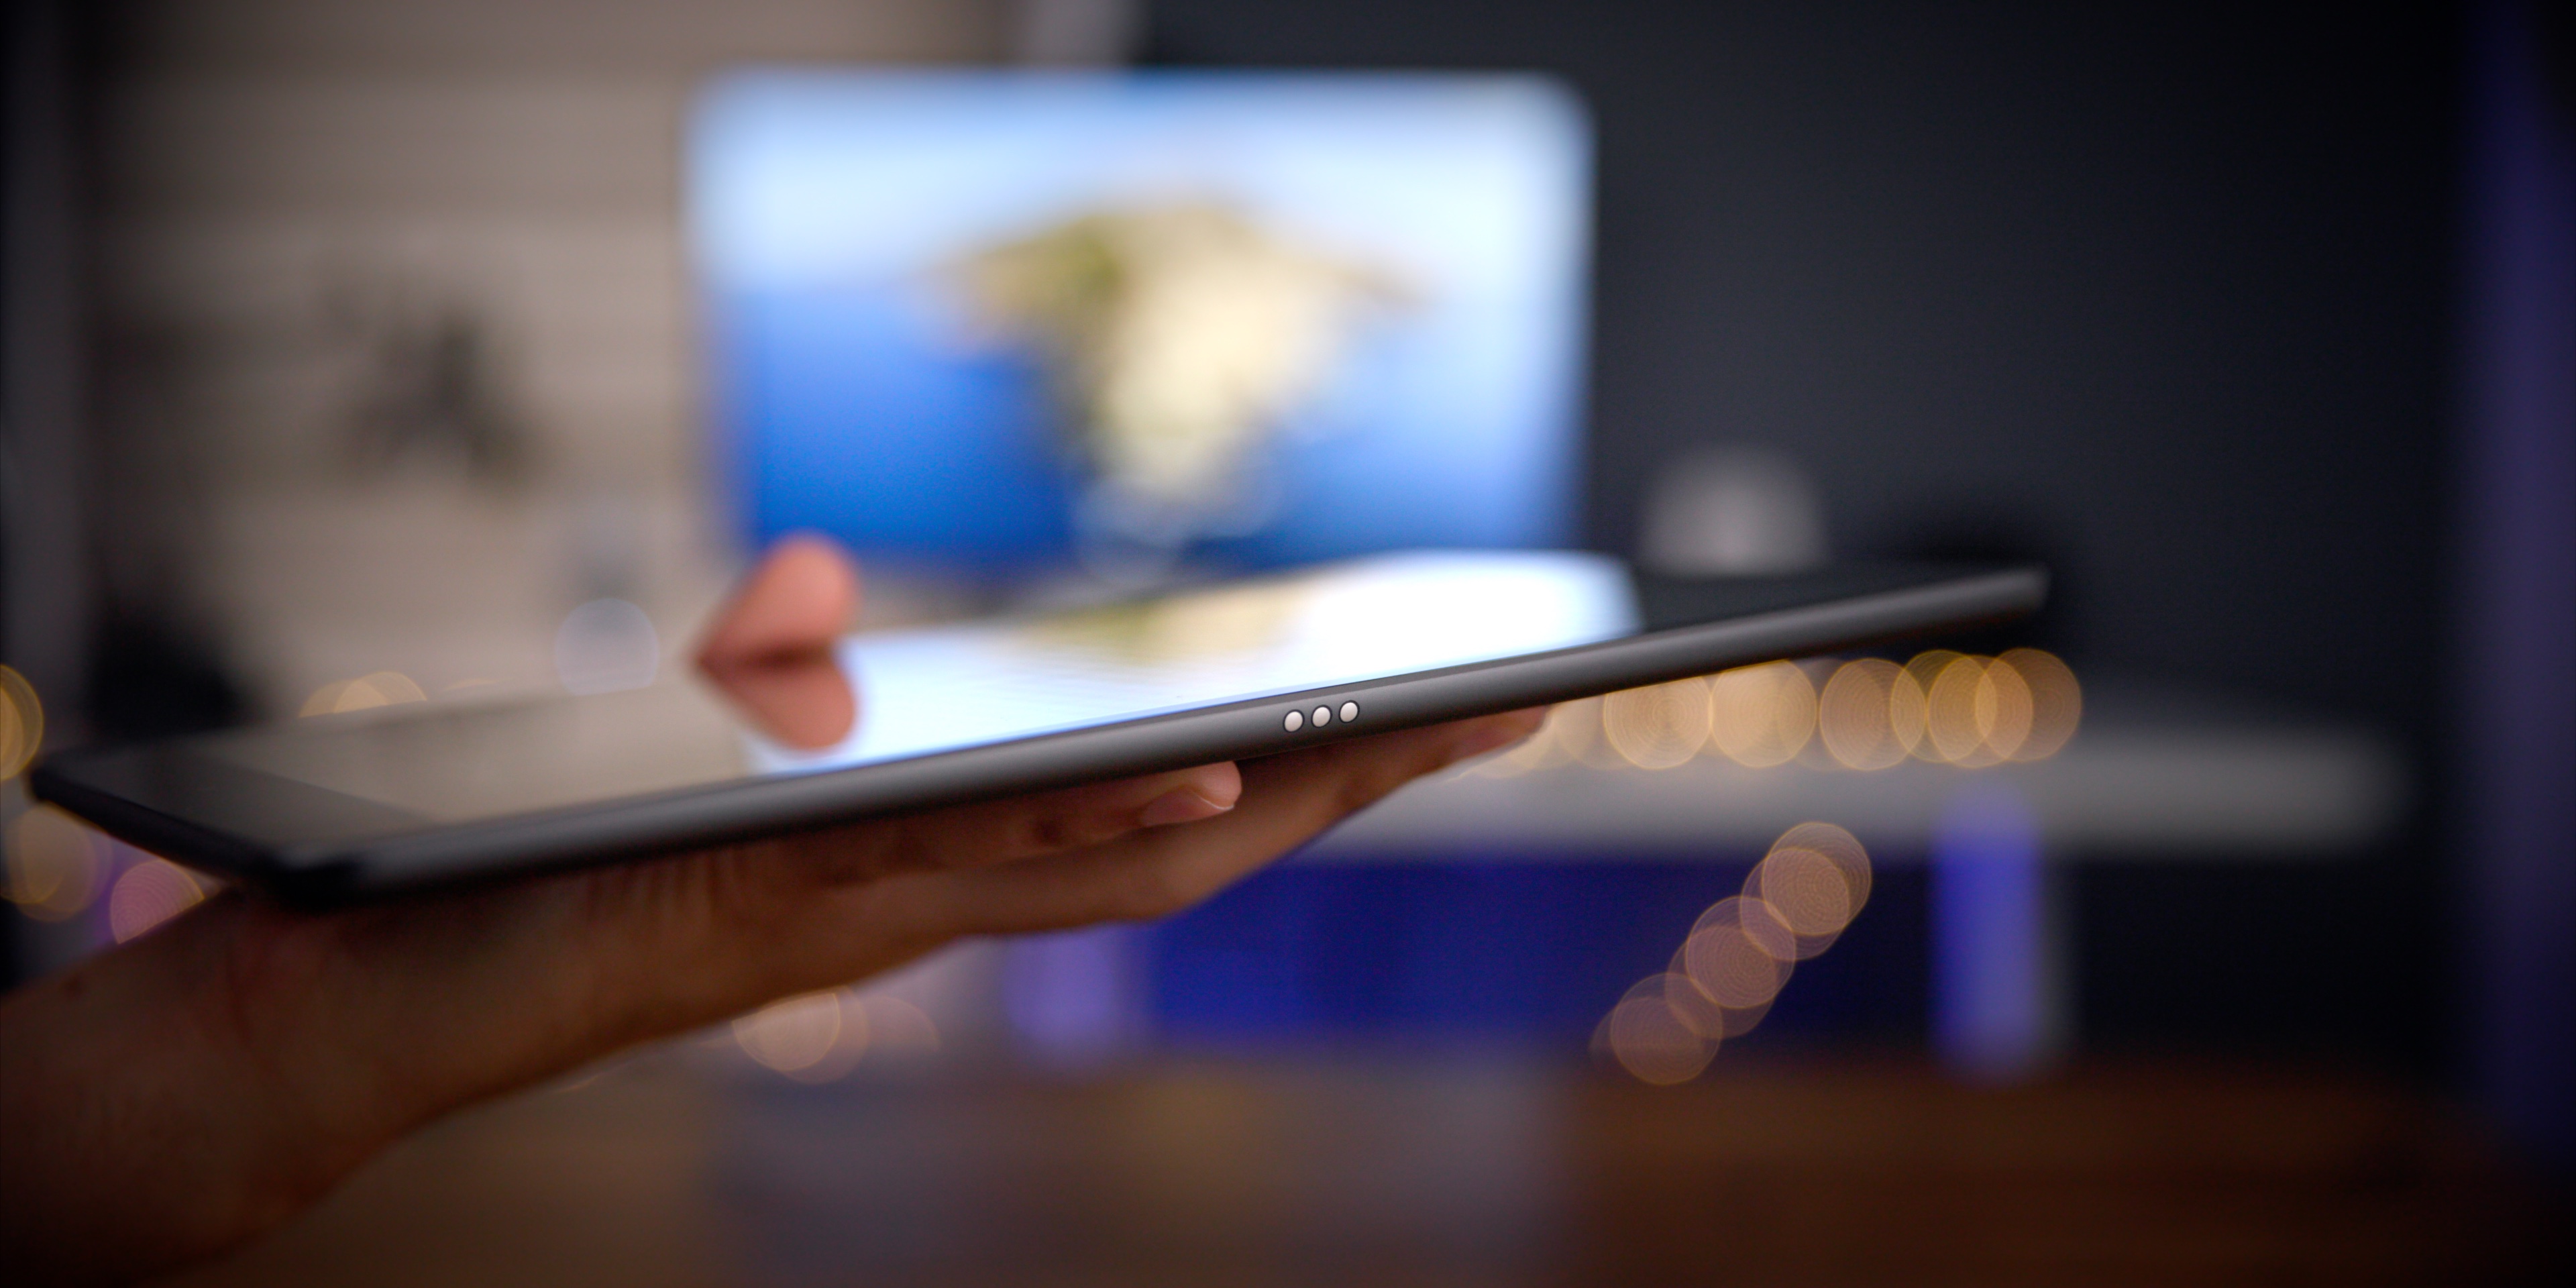 Apple iPad 7 2019 -  External Reviews